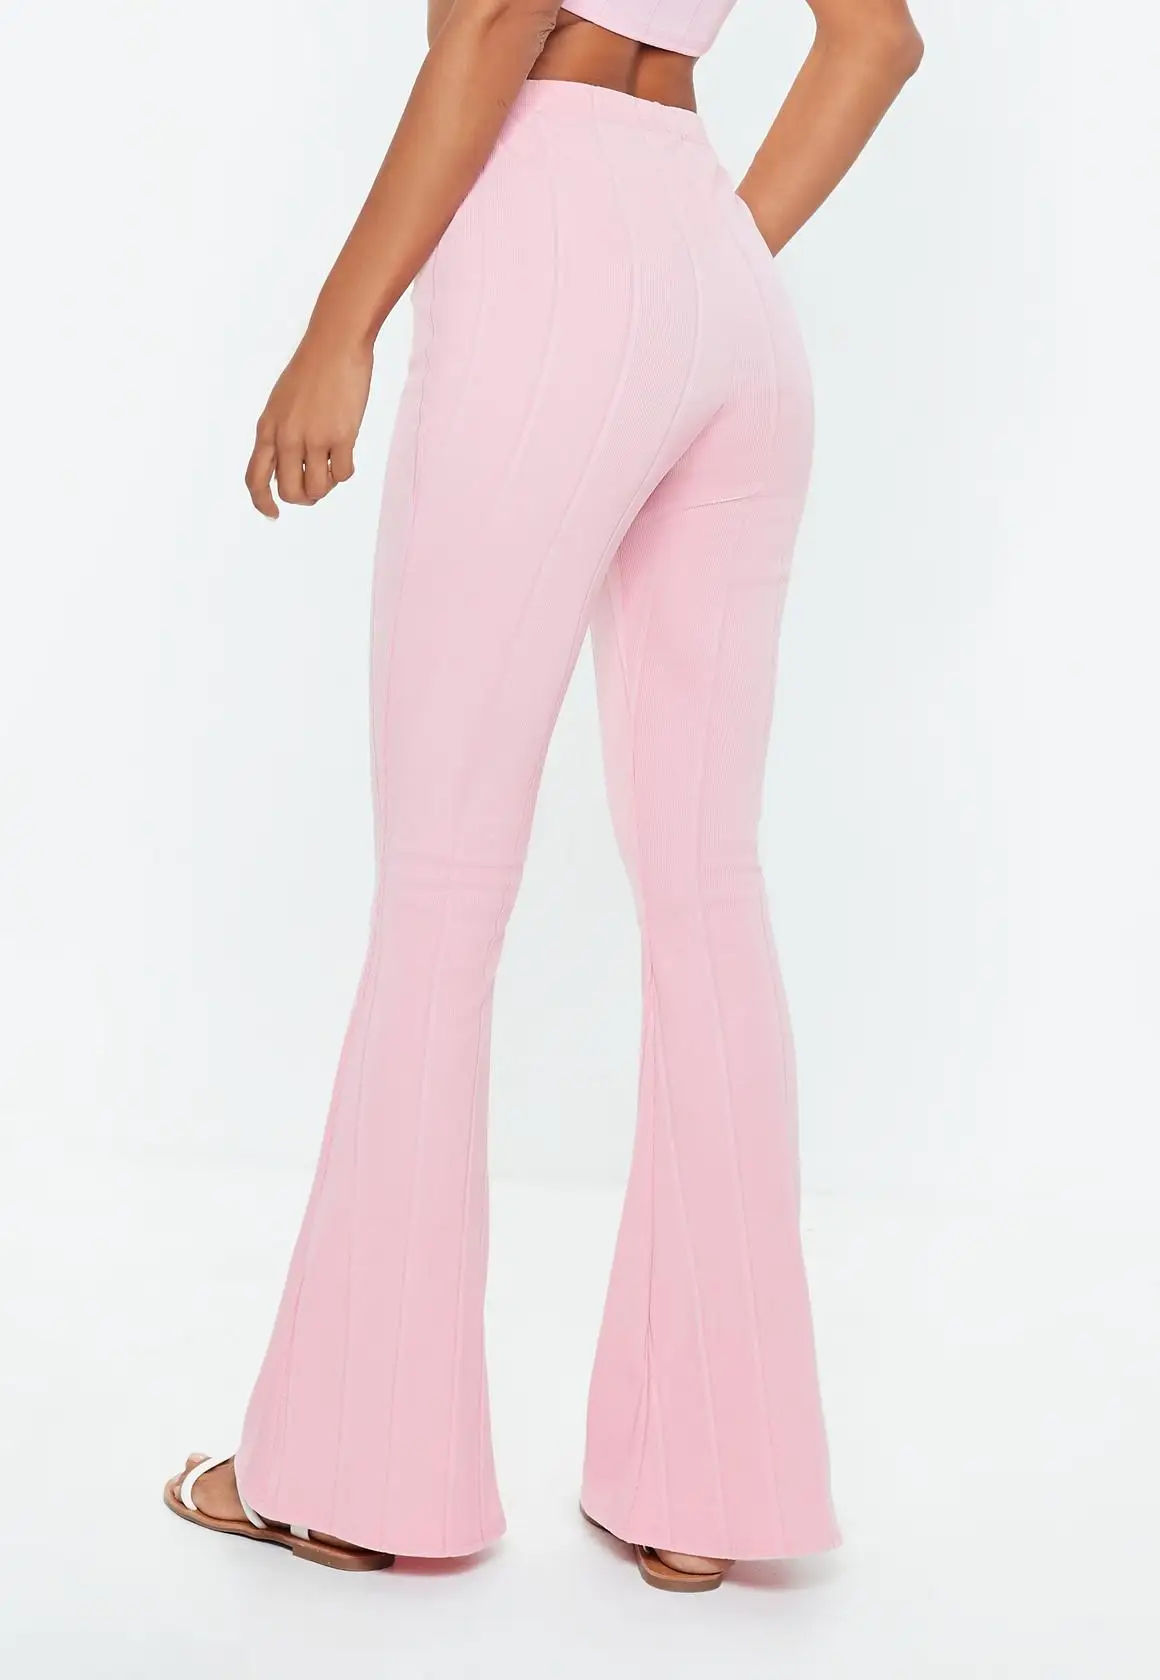 Pink Polyester Flare Bandage Women Pants Women Fashion Clothing - Buy ...